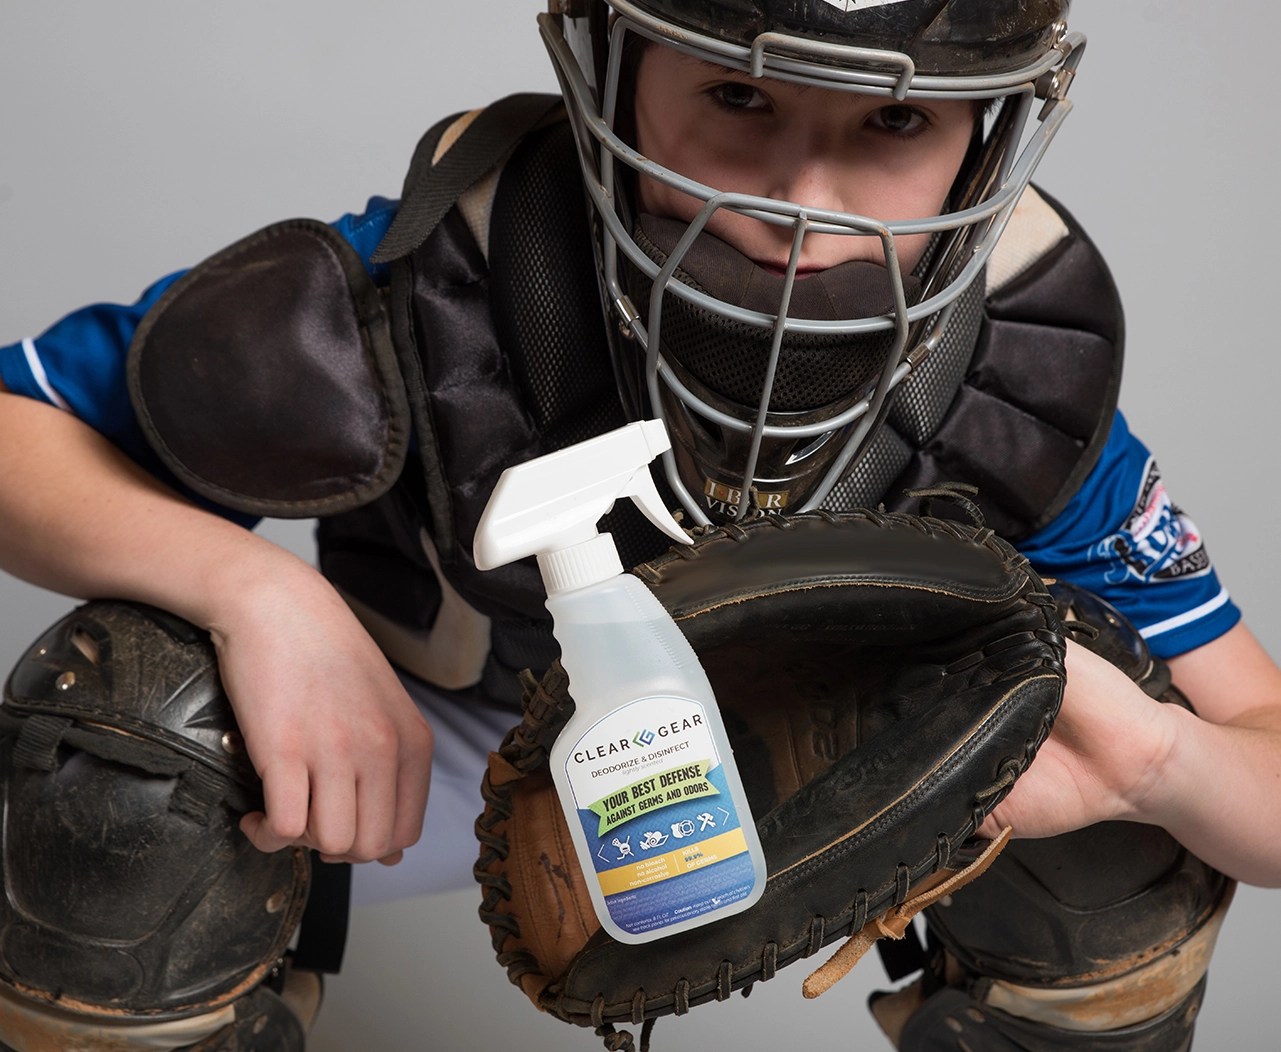 How to Clean Baseball Helmets?